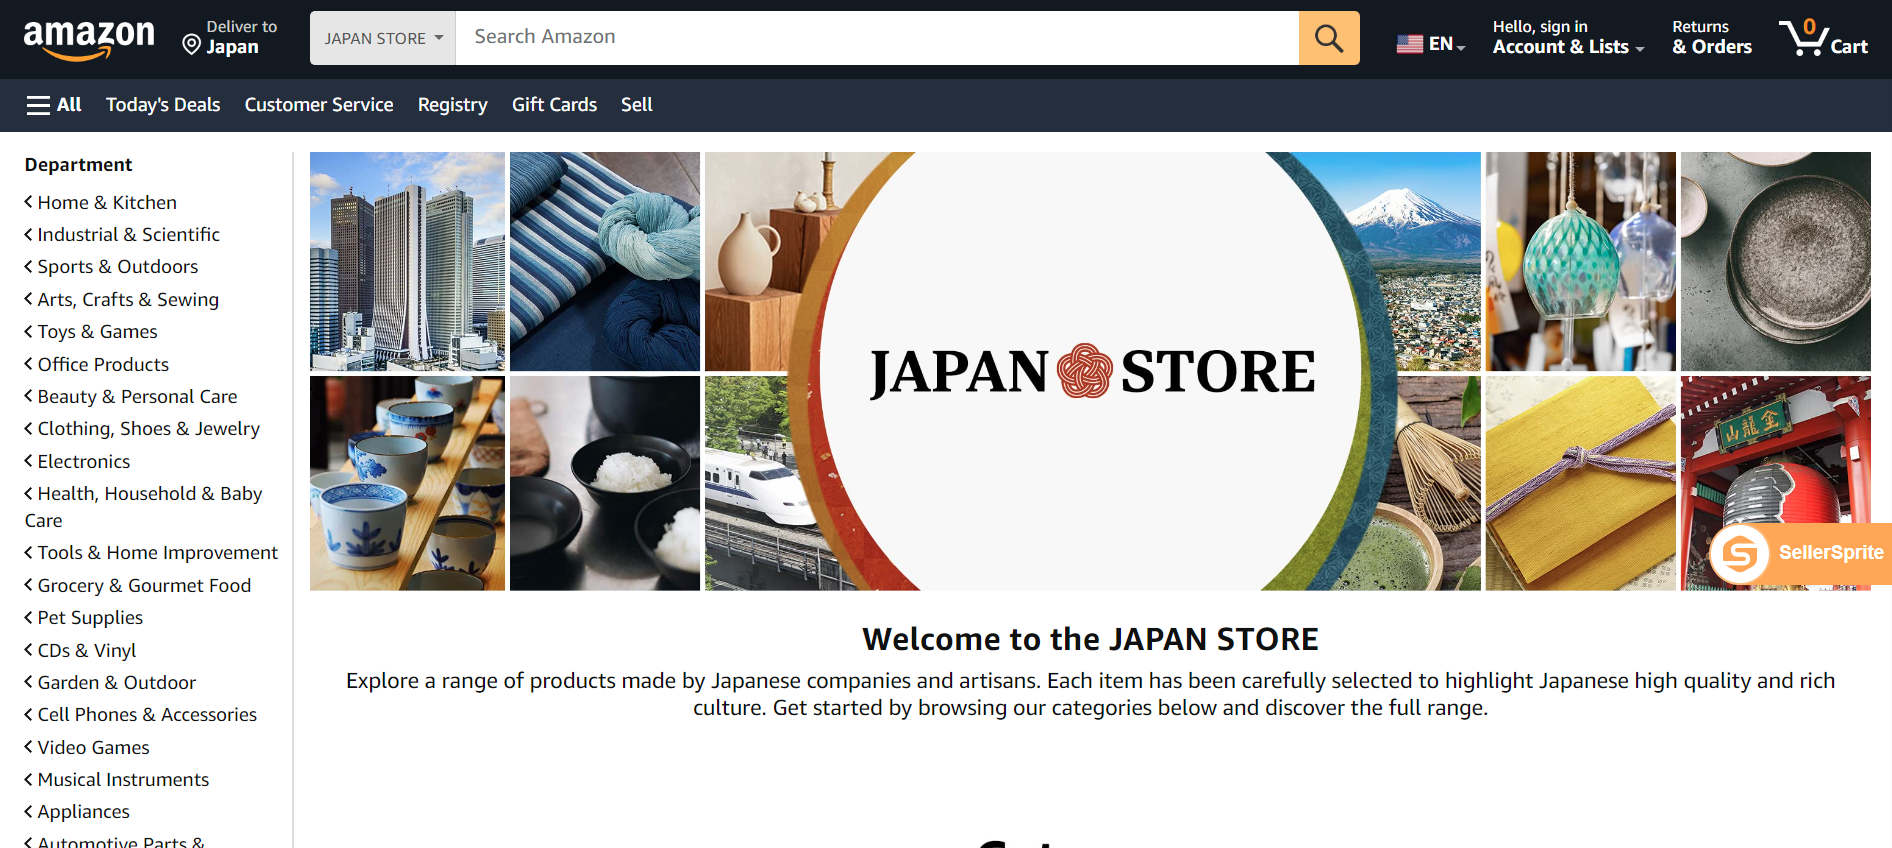 Amazon JAPAN STOREの参加条件とは？